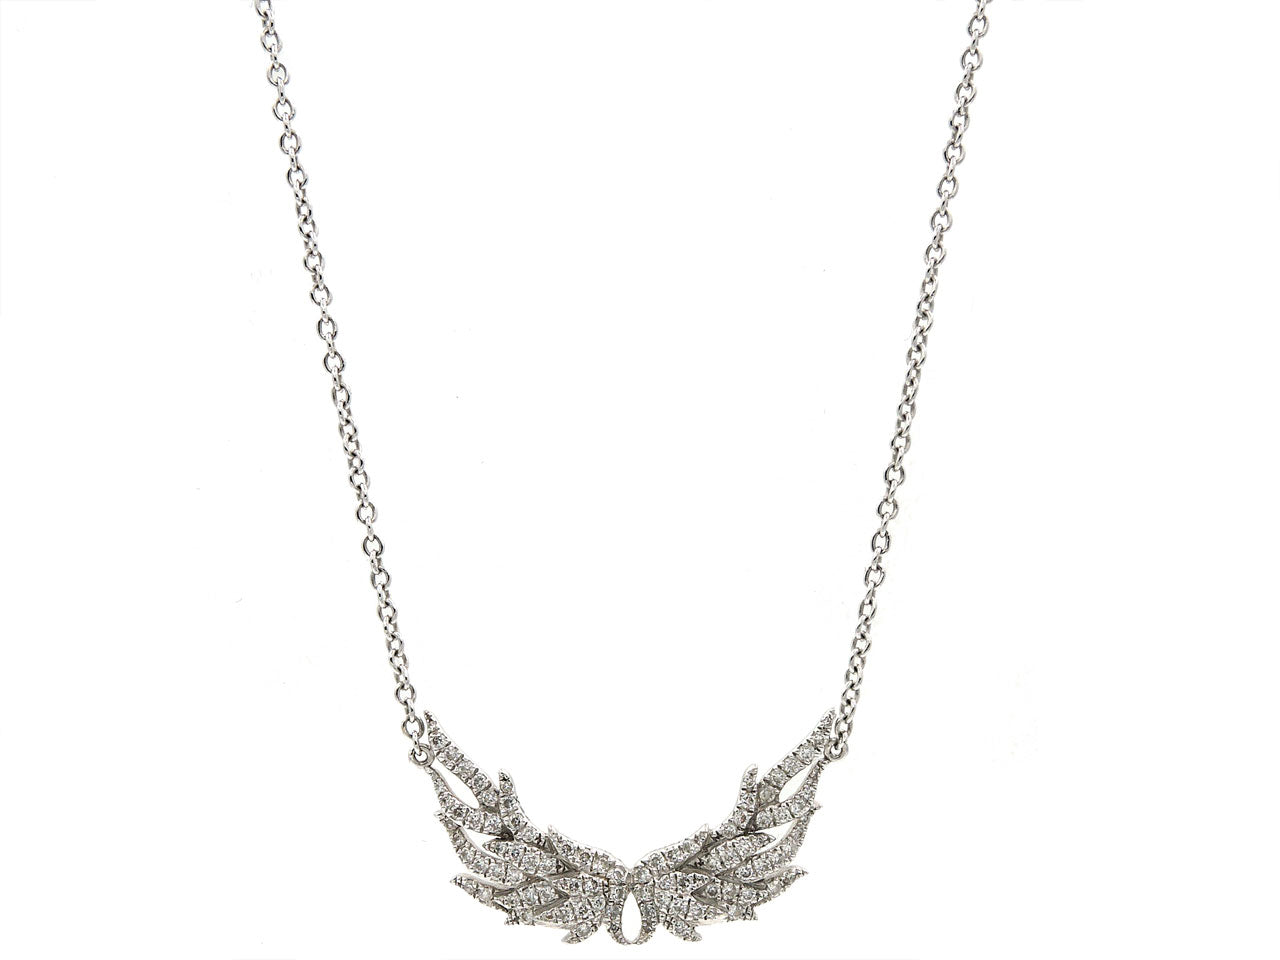 Henri J. Sillam Diamond Wings Necklace in 18K White Gold